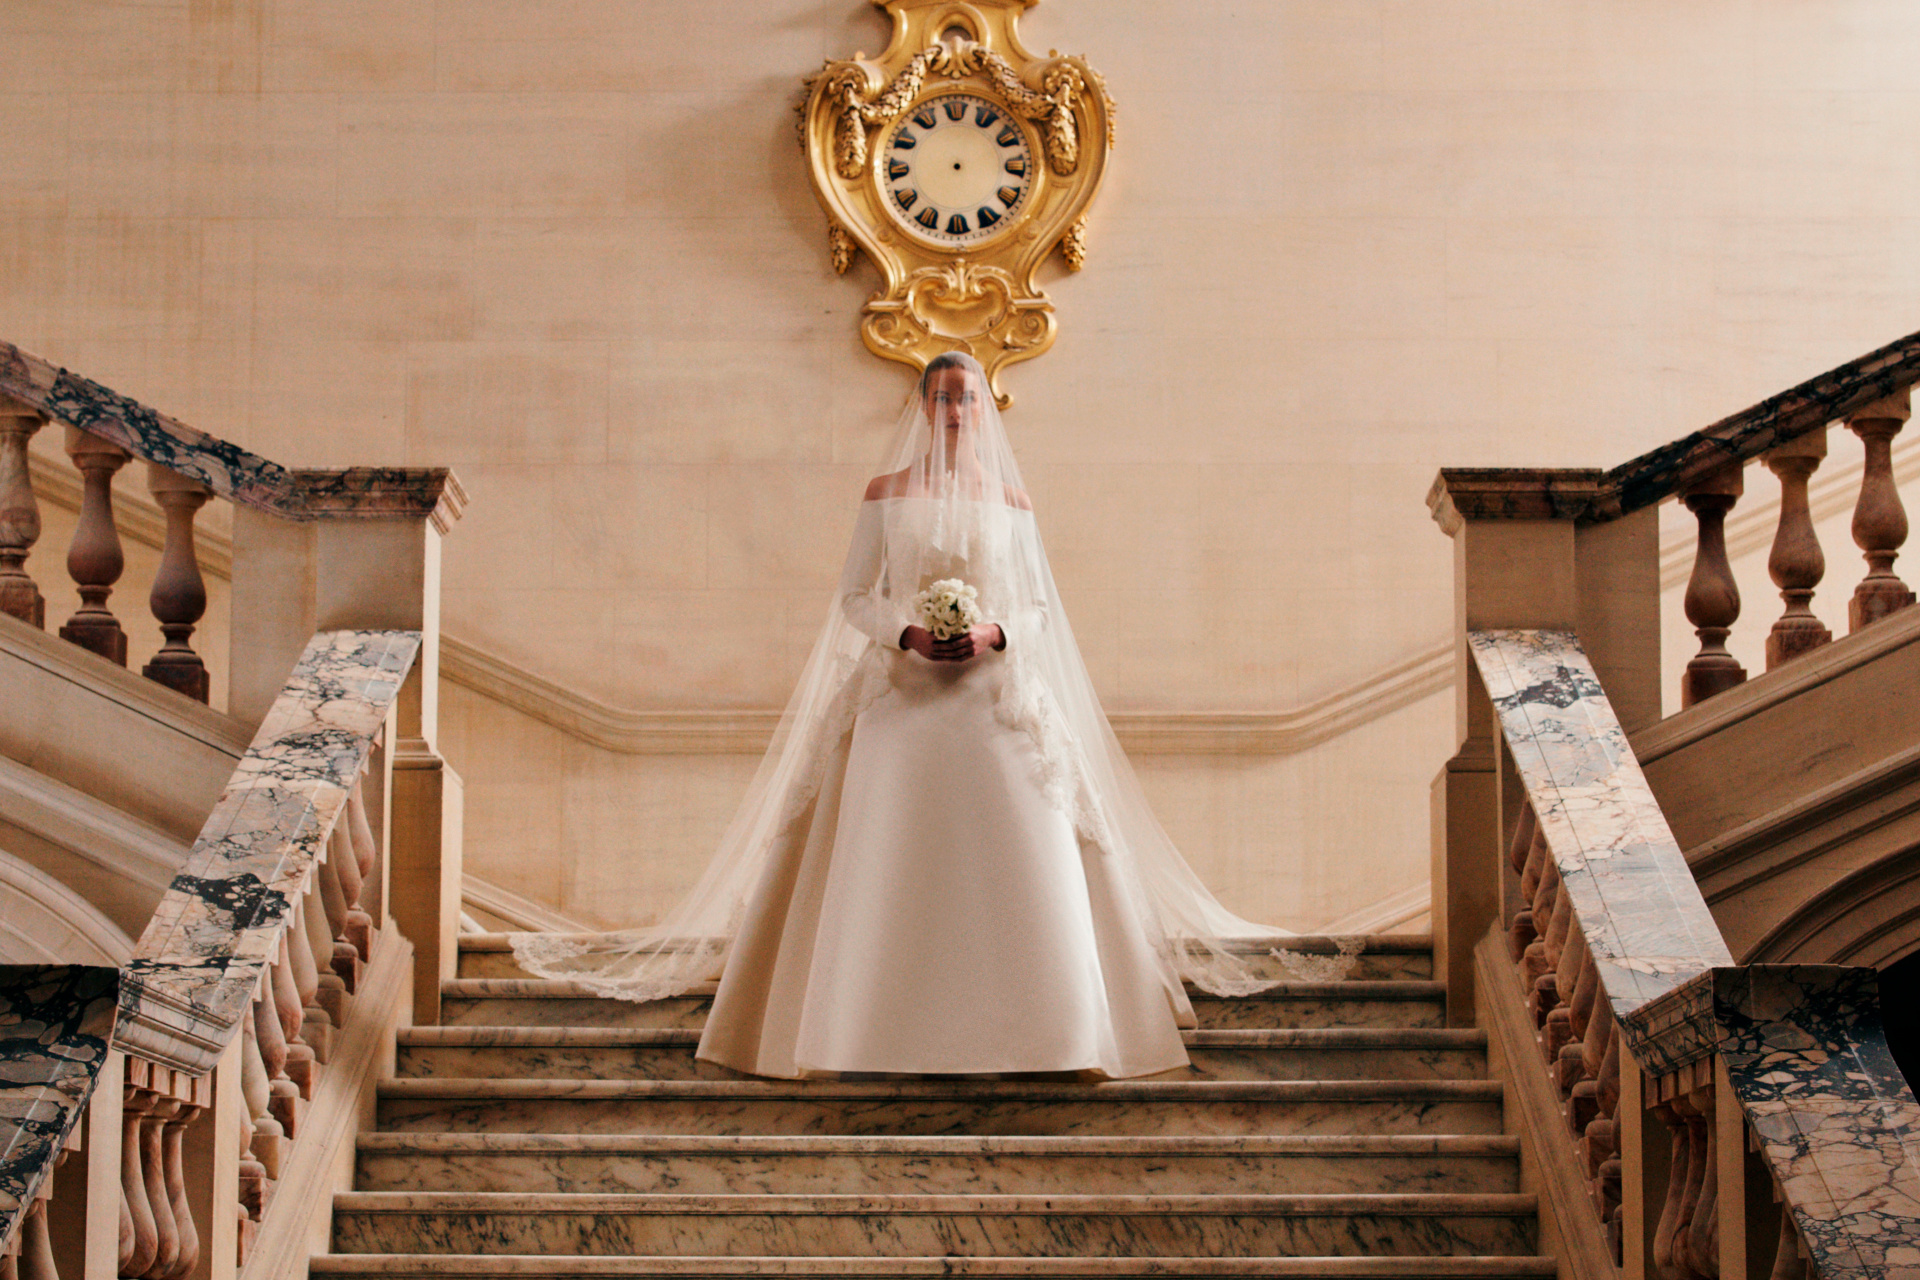 Woman in wedding dress walking down stairs